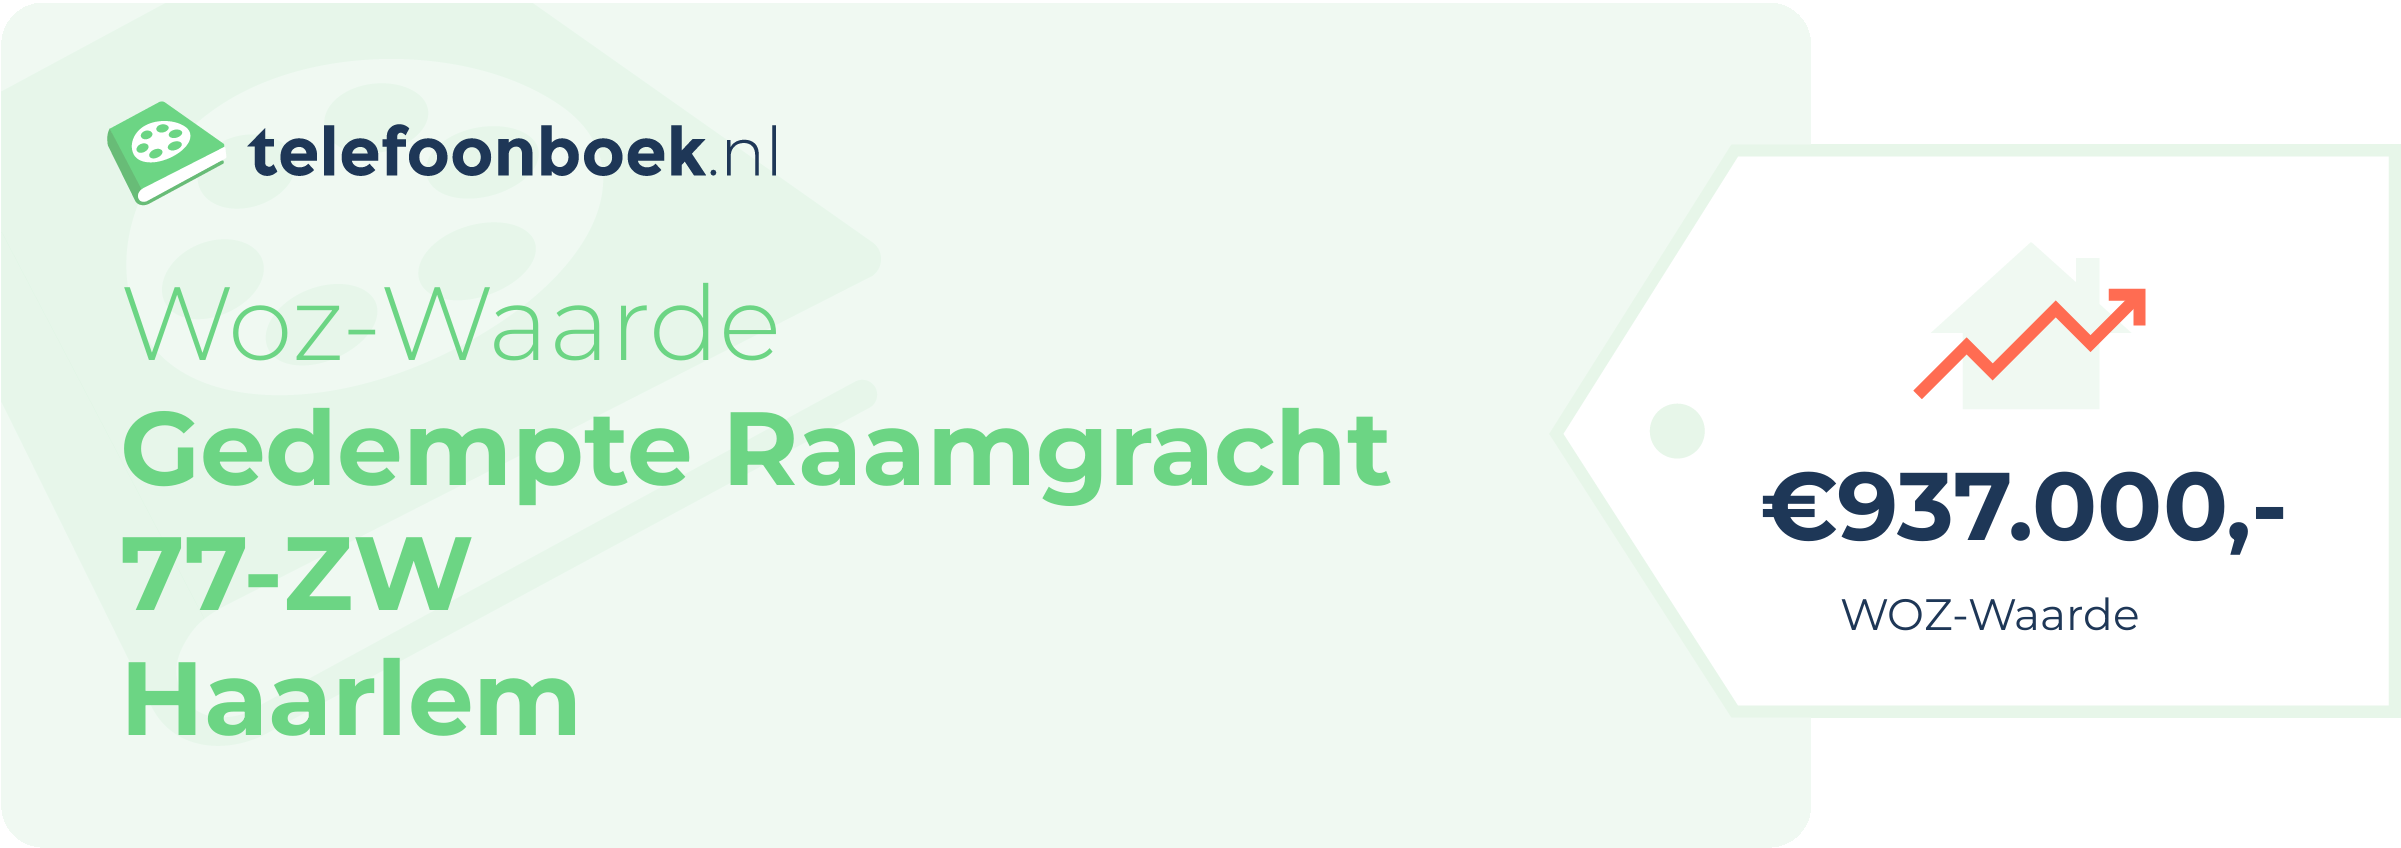 WOZ-waarde Gedempte Raamgracht 77-ZW Haarlem